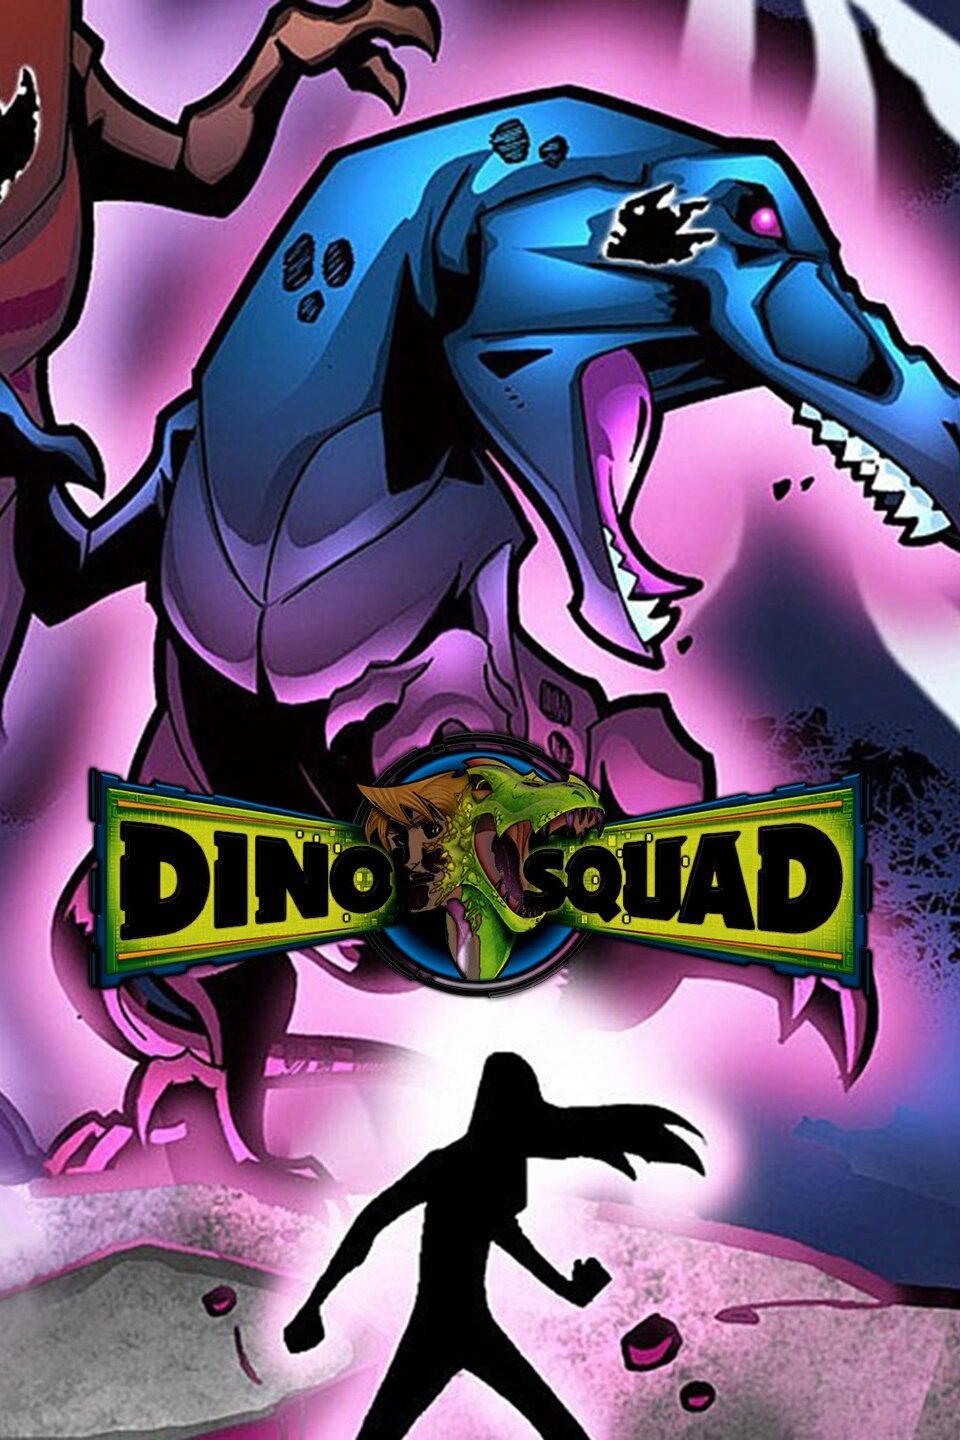 dino squad video game